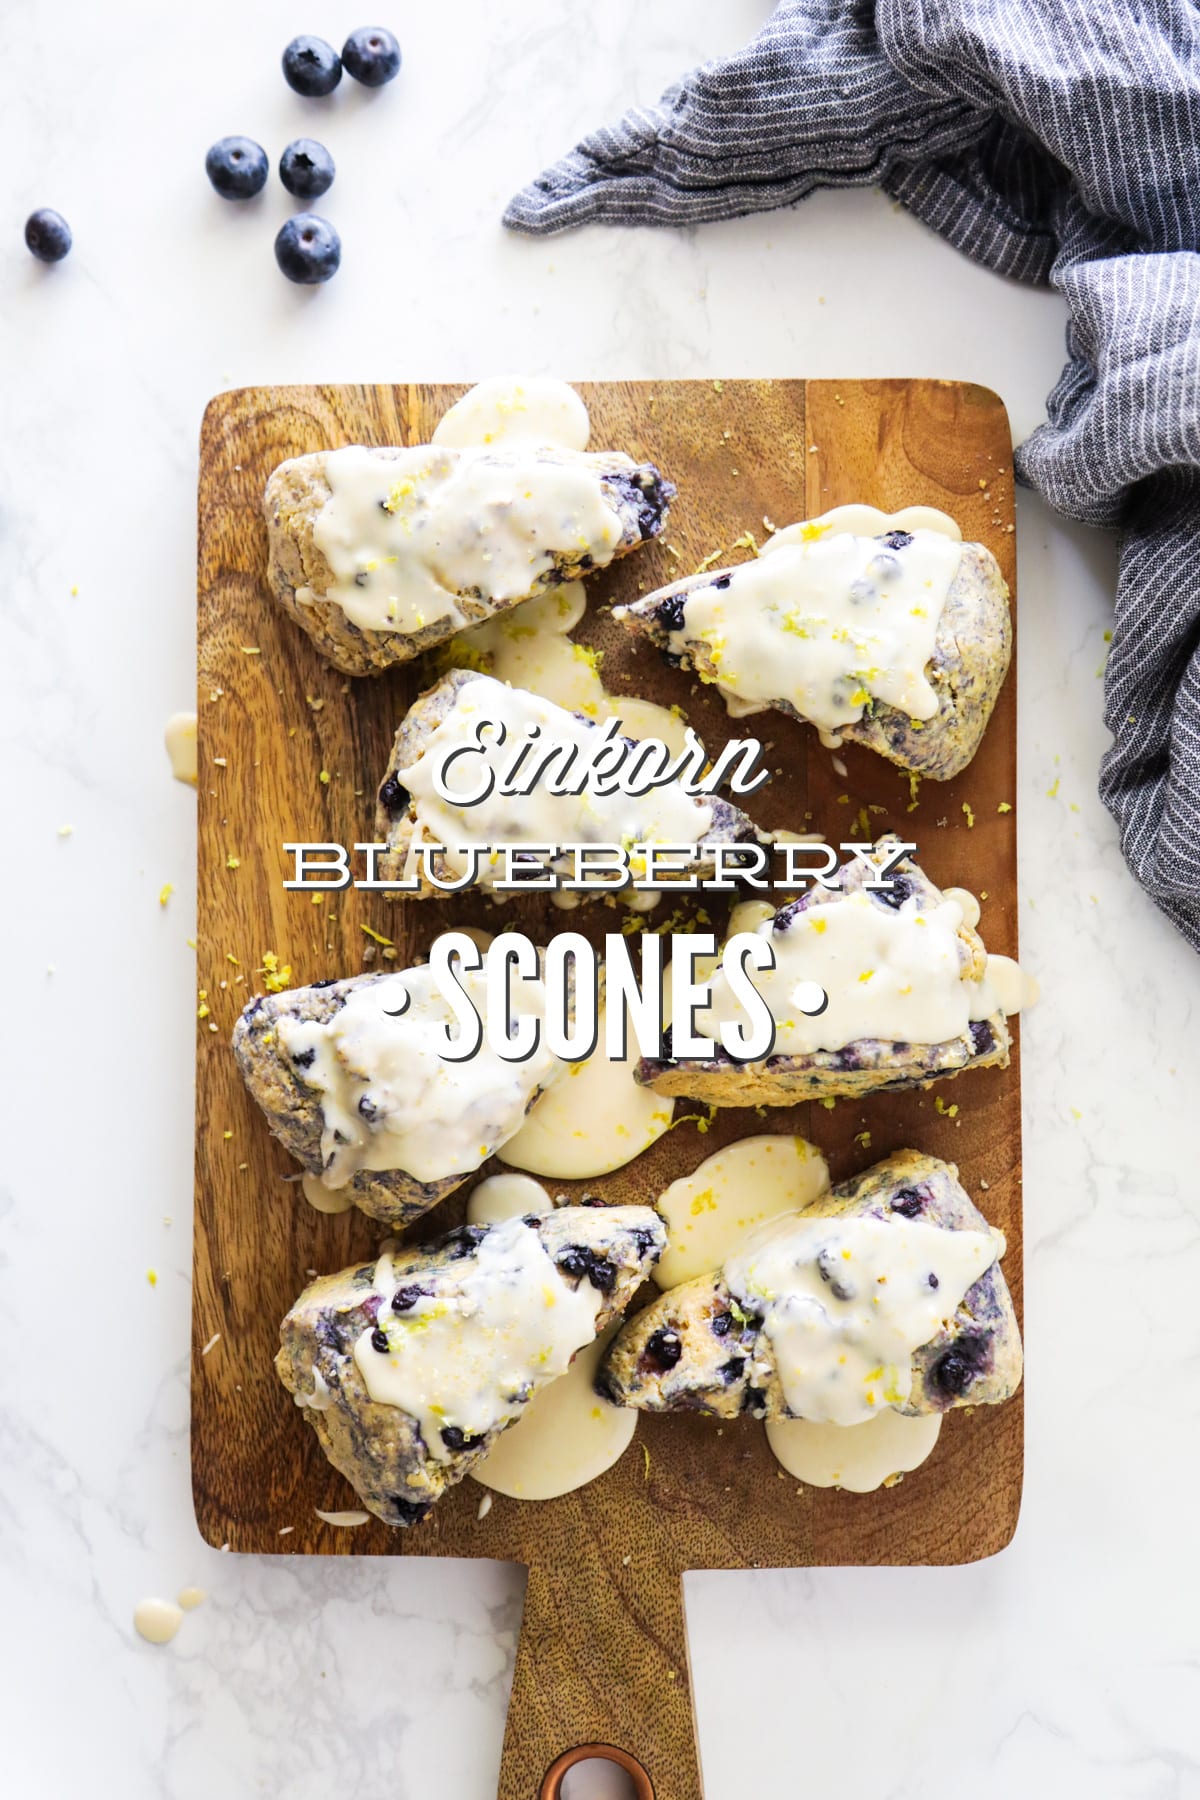 Einkorn Blueberry Scones (Naturally-Sweetened) with Lemon Glaze